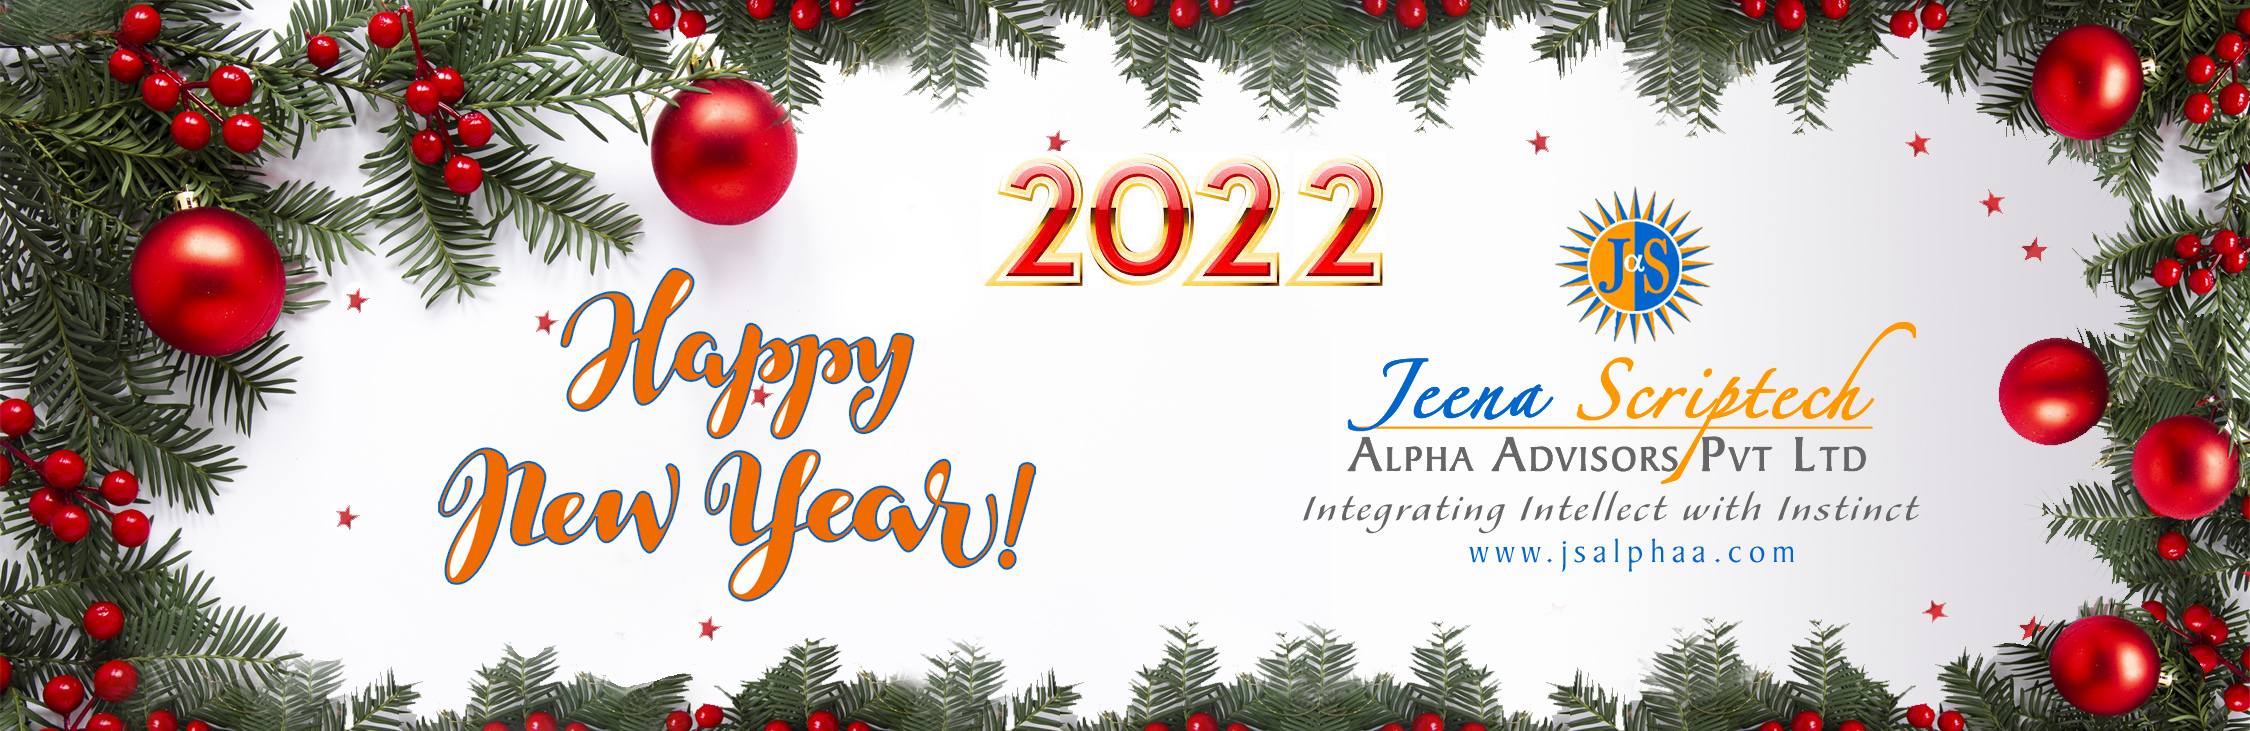 JSAA Happy New Year 2022